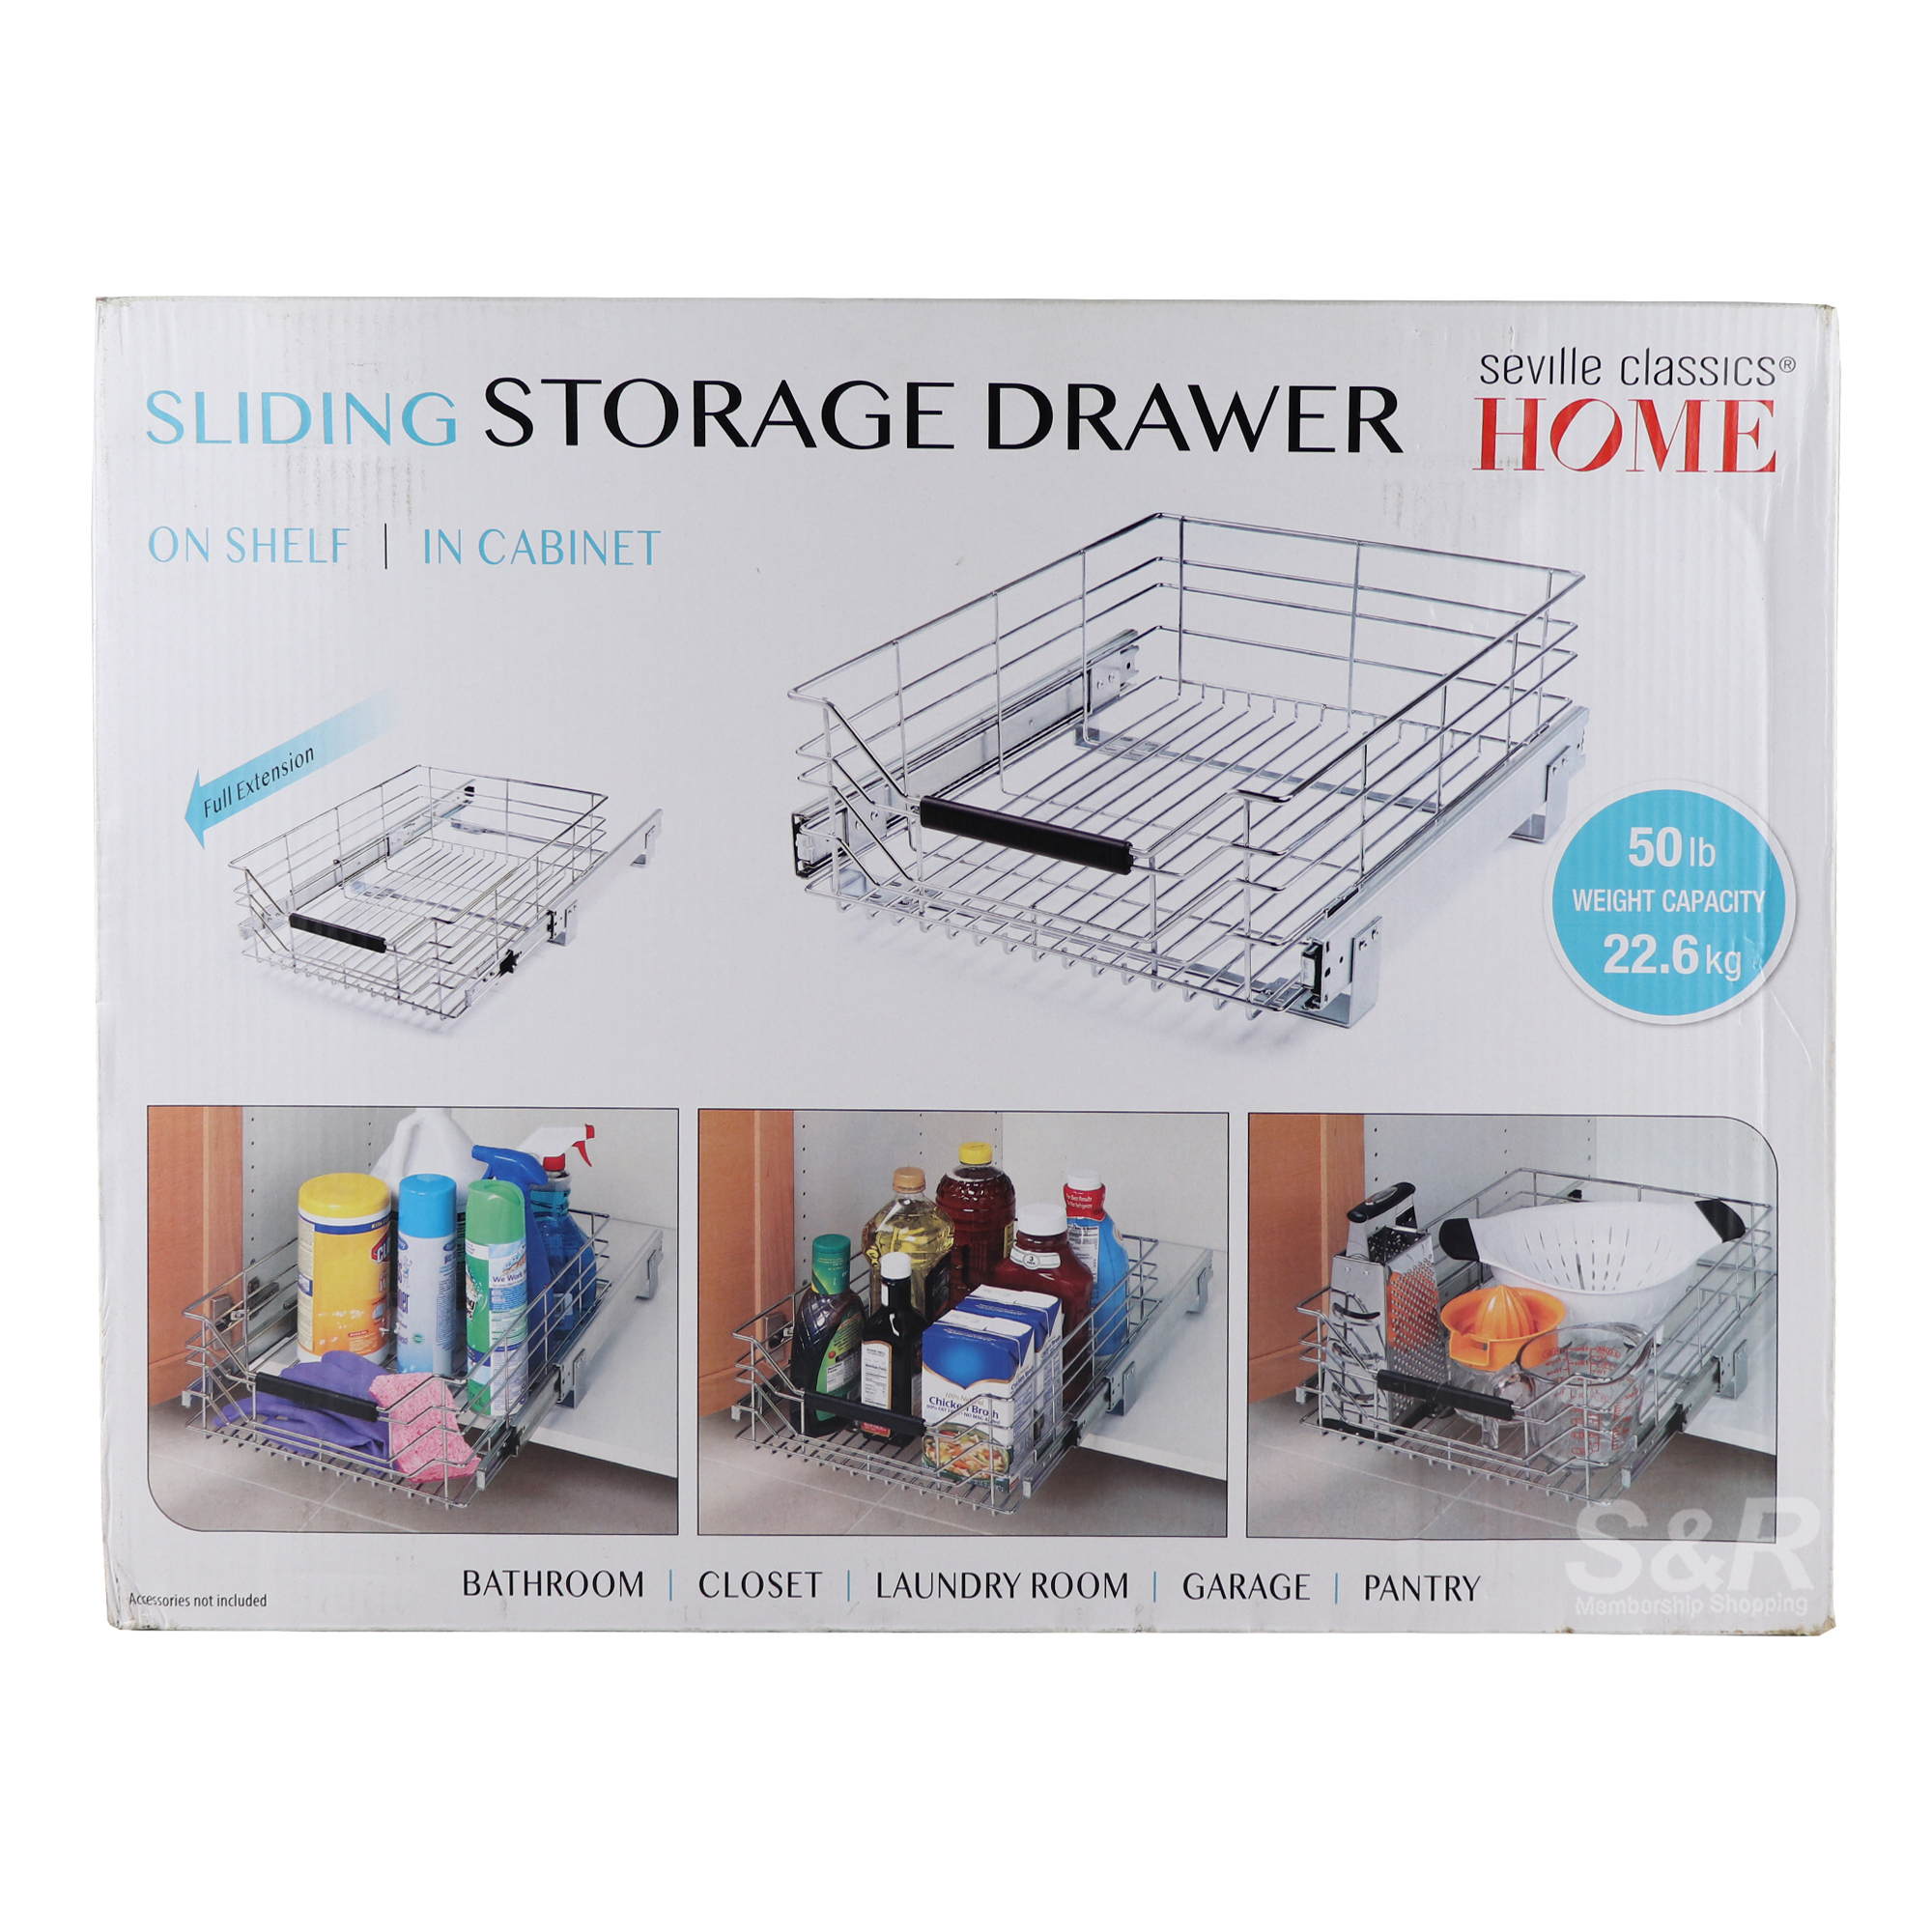 Seville Classics Home Sliding Storage Drawer 1pc